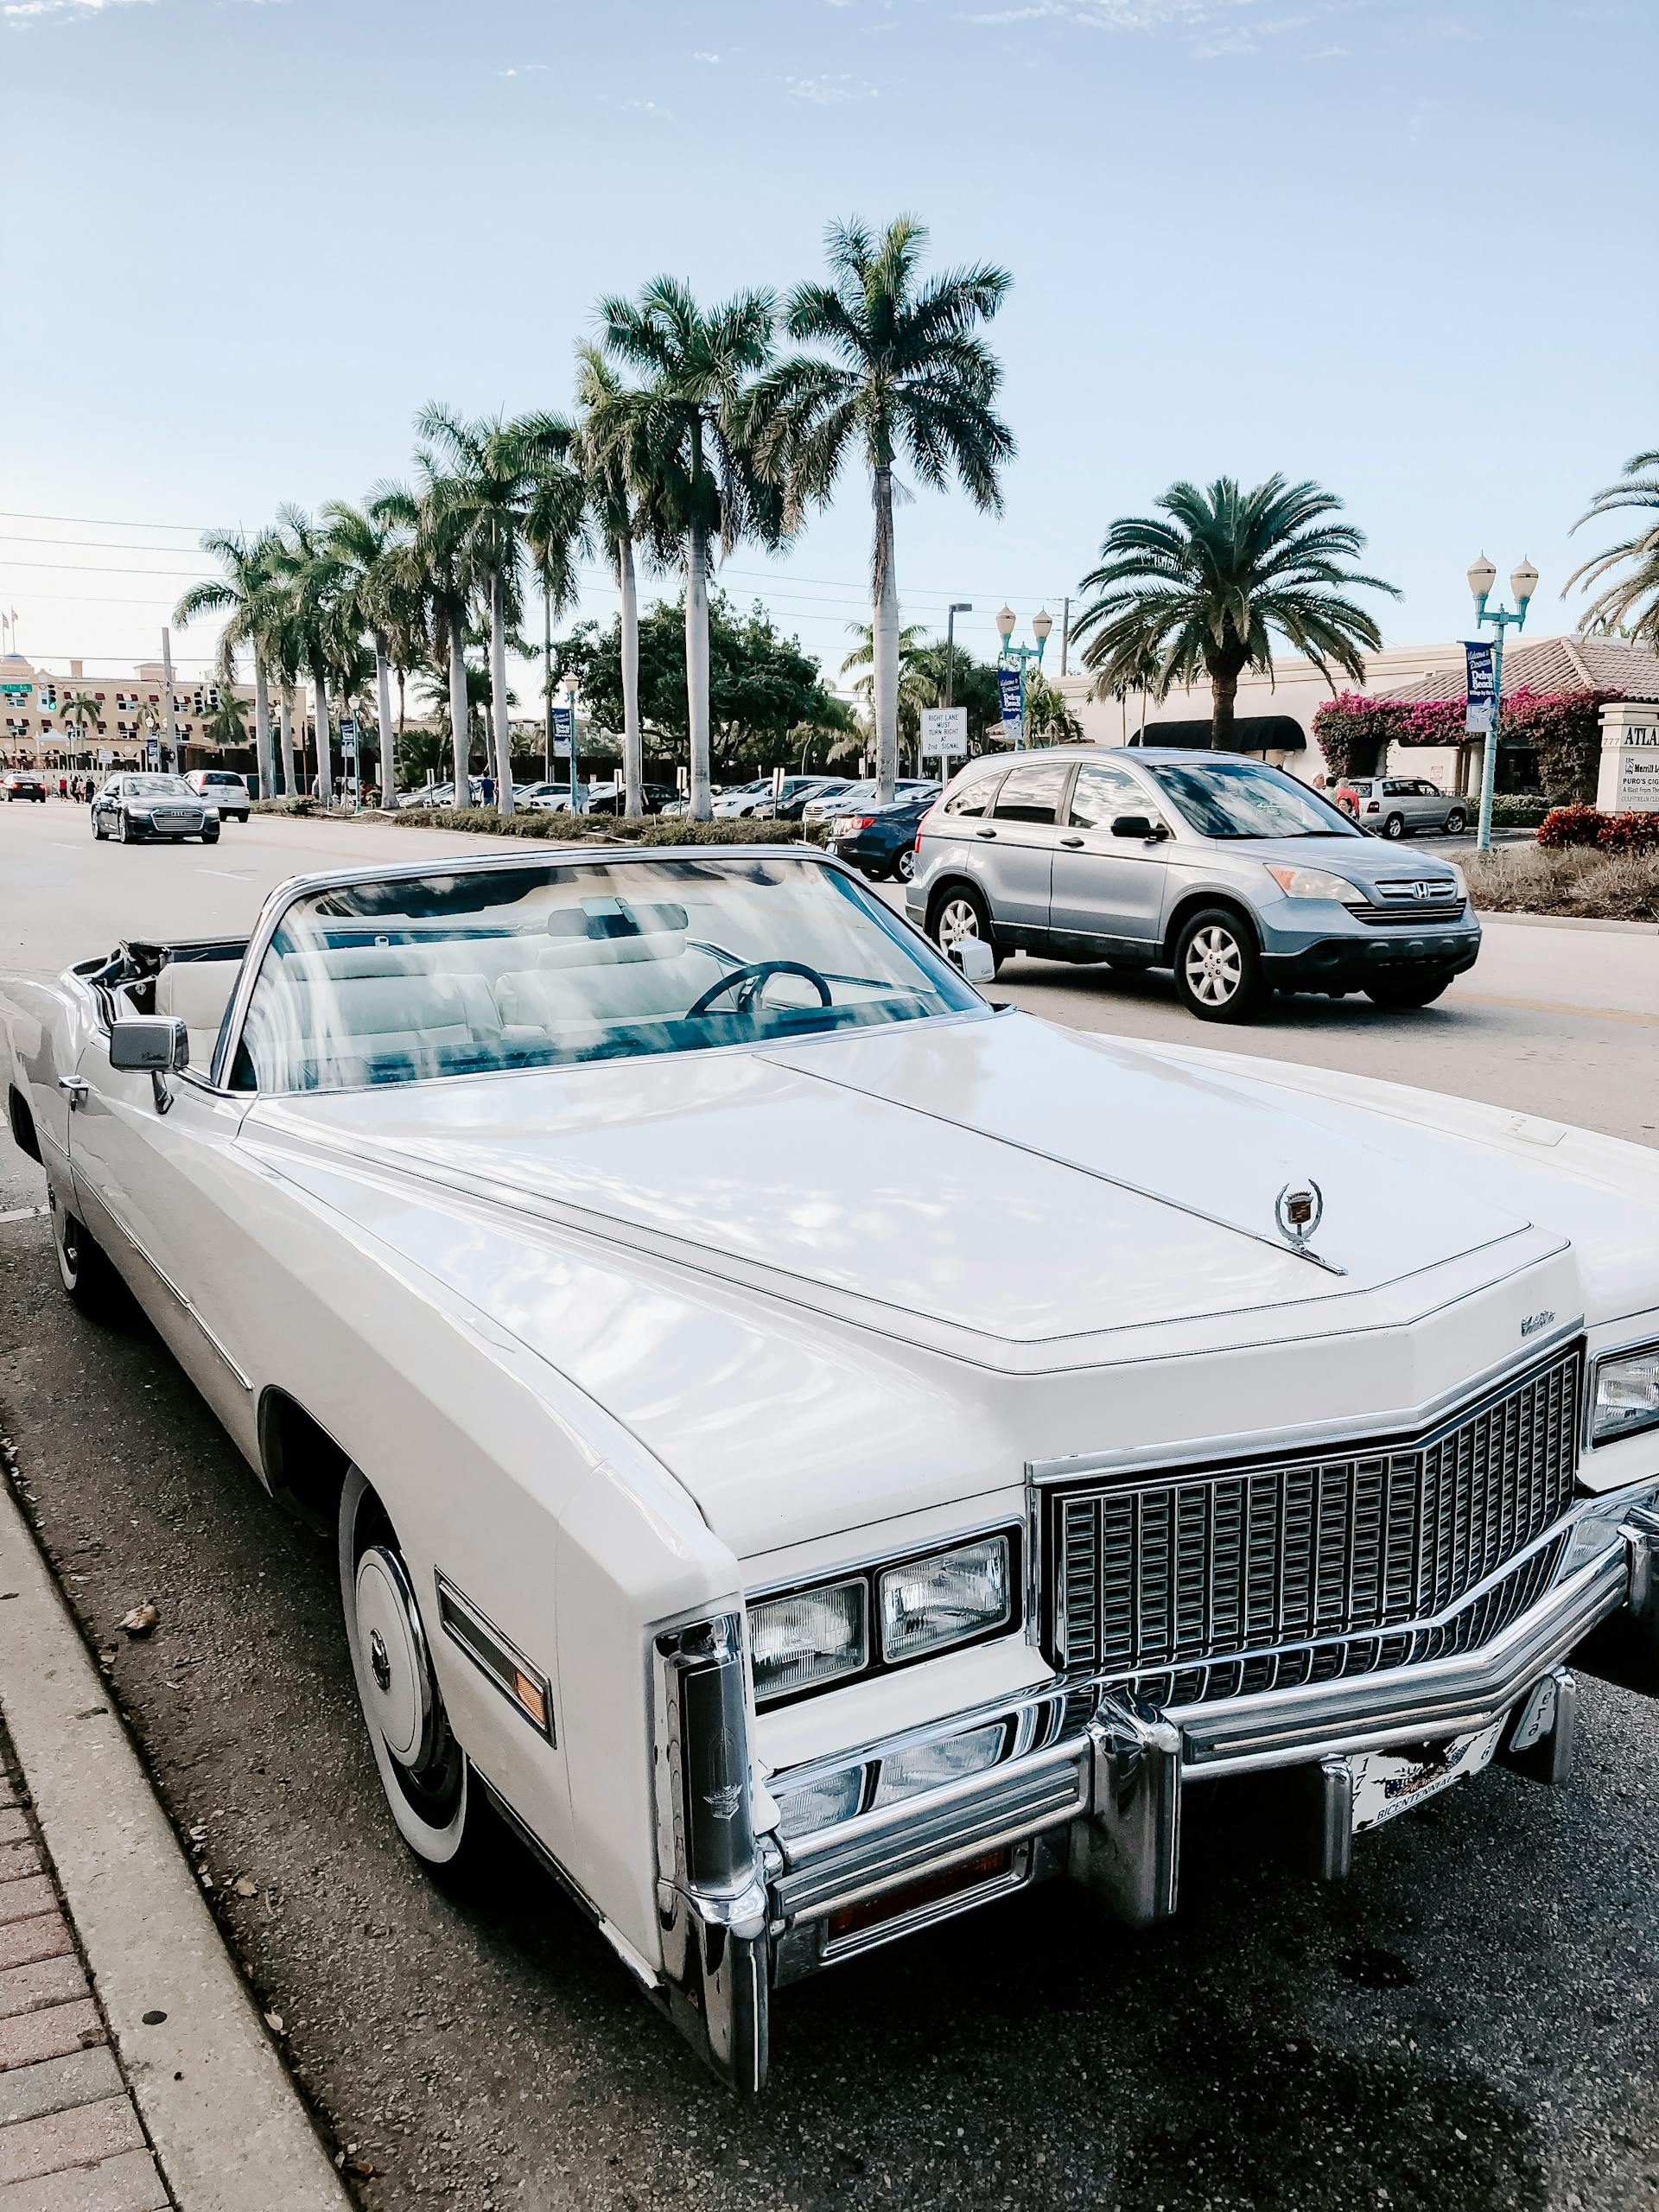 A white vintage car | Source: Pexels